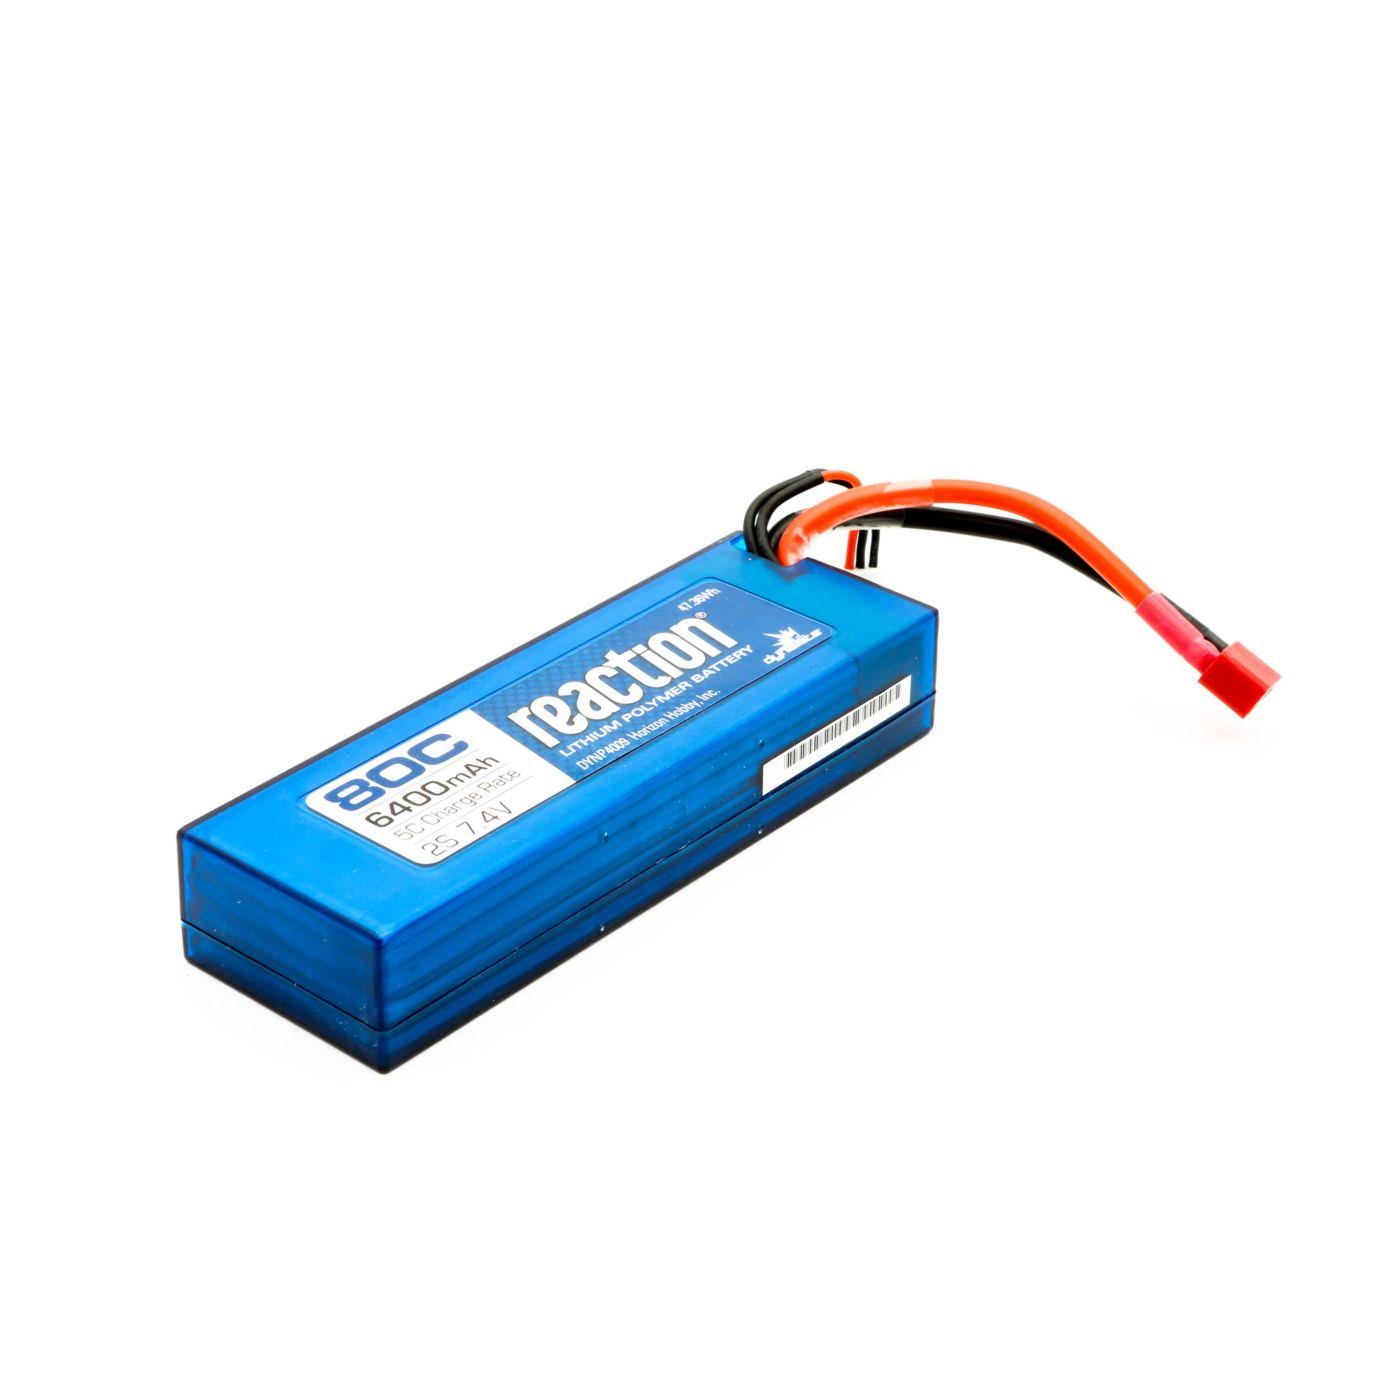 Dynamite Reaction Hardcase Lipo Battery - 7.4V, 6400 mah